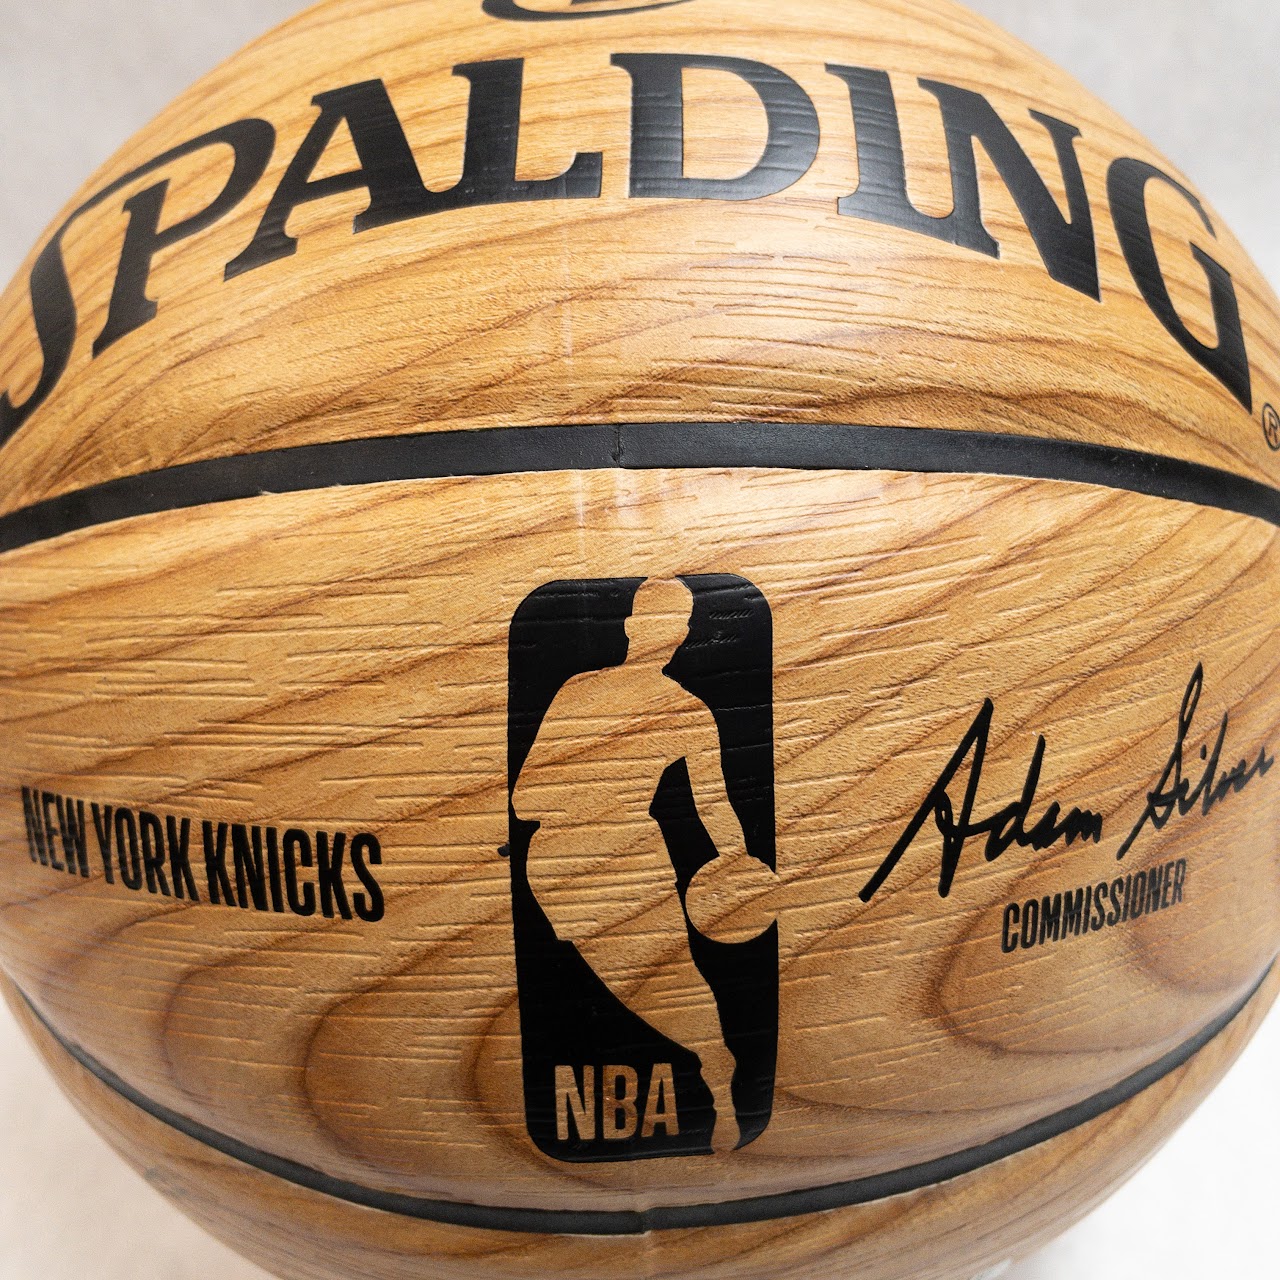 Spalding NY Knicks Signed Collectible Basketball